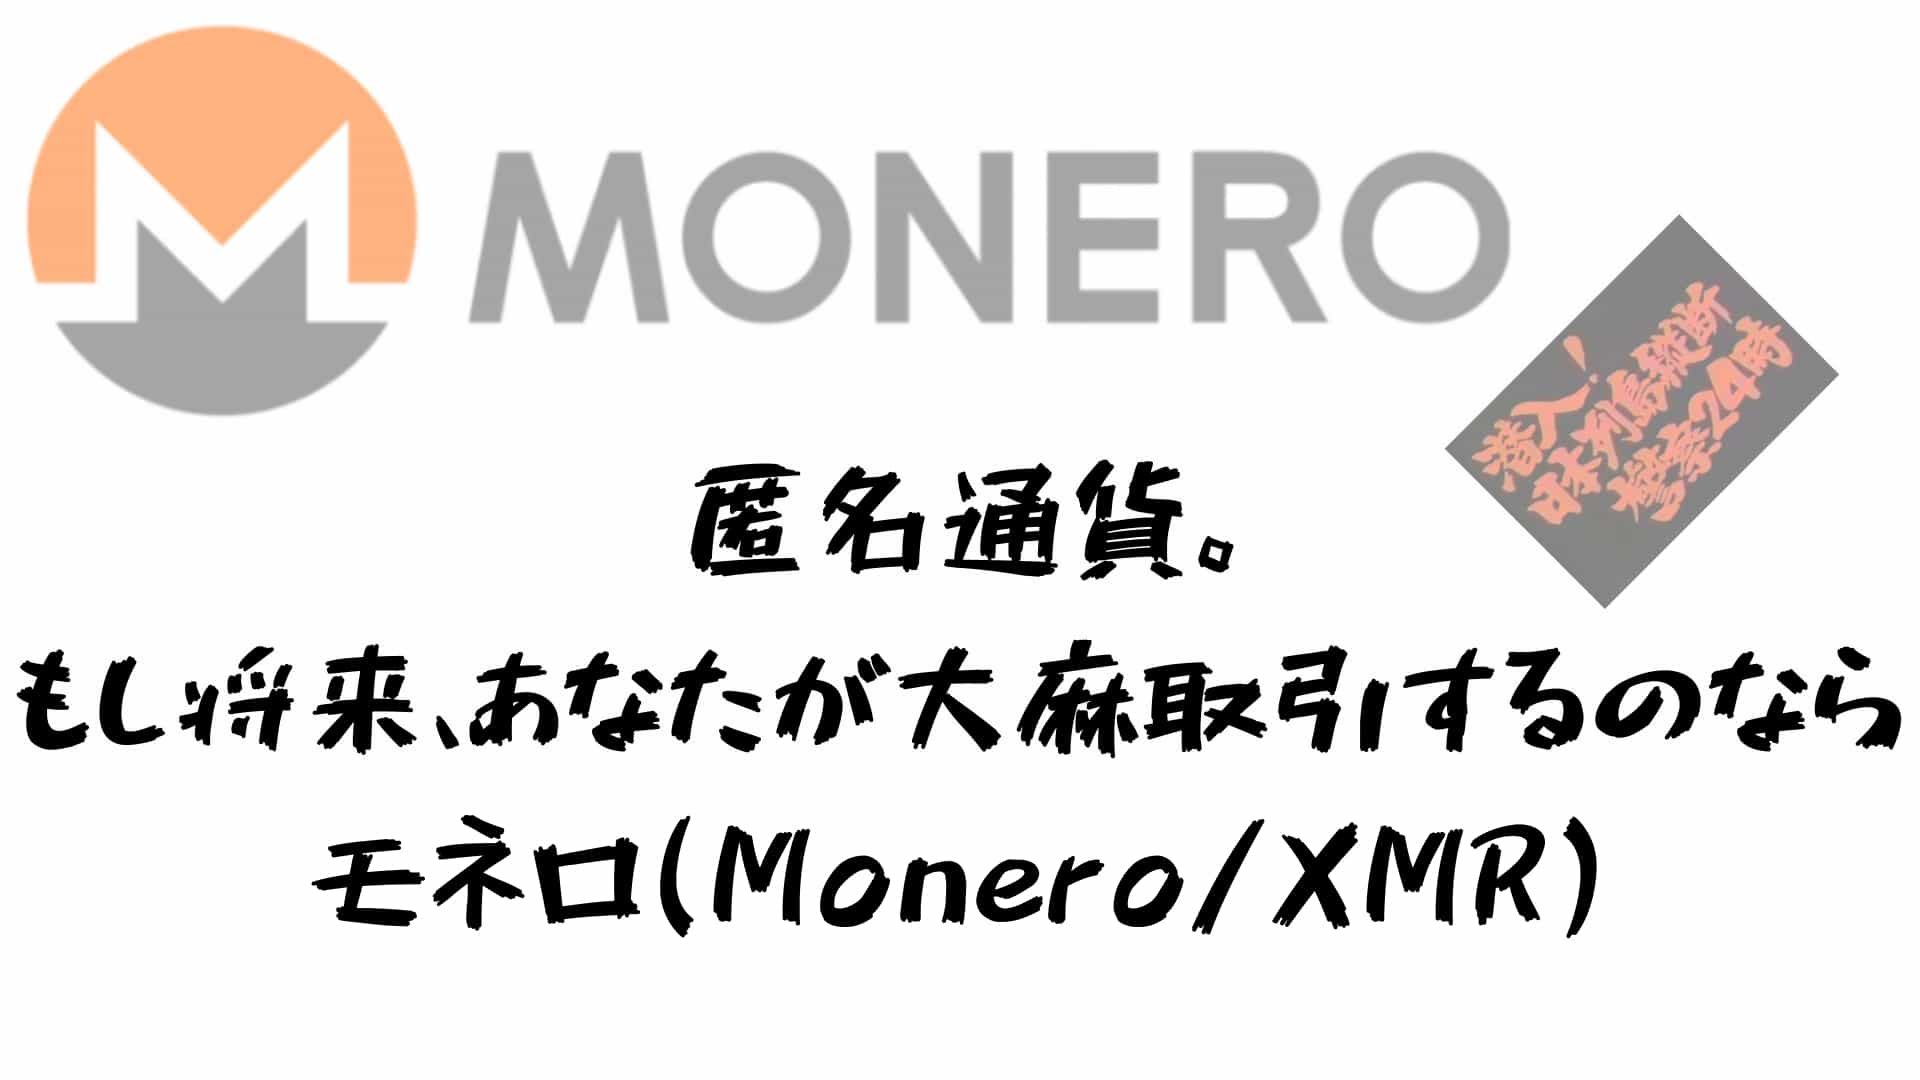 Monero匿名通貨。 もし将来、あなたが大麻取引するのなら 仮想通貨モネロ(Monero_XMR)